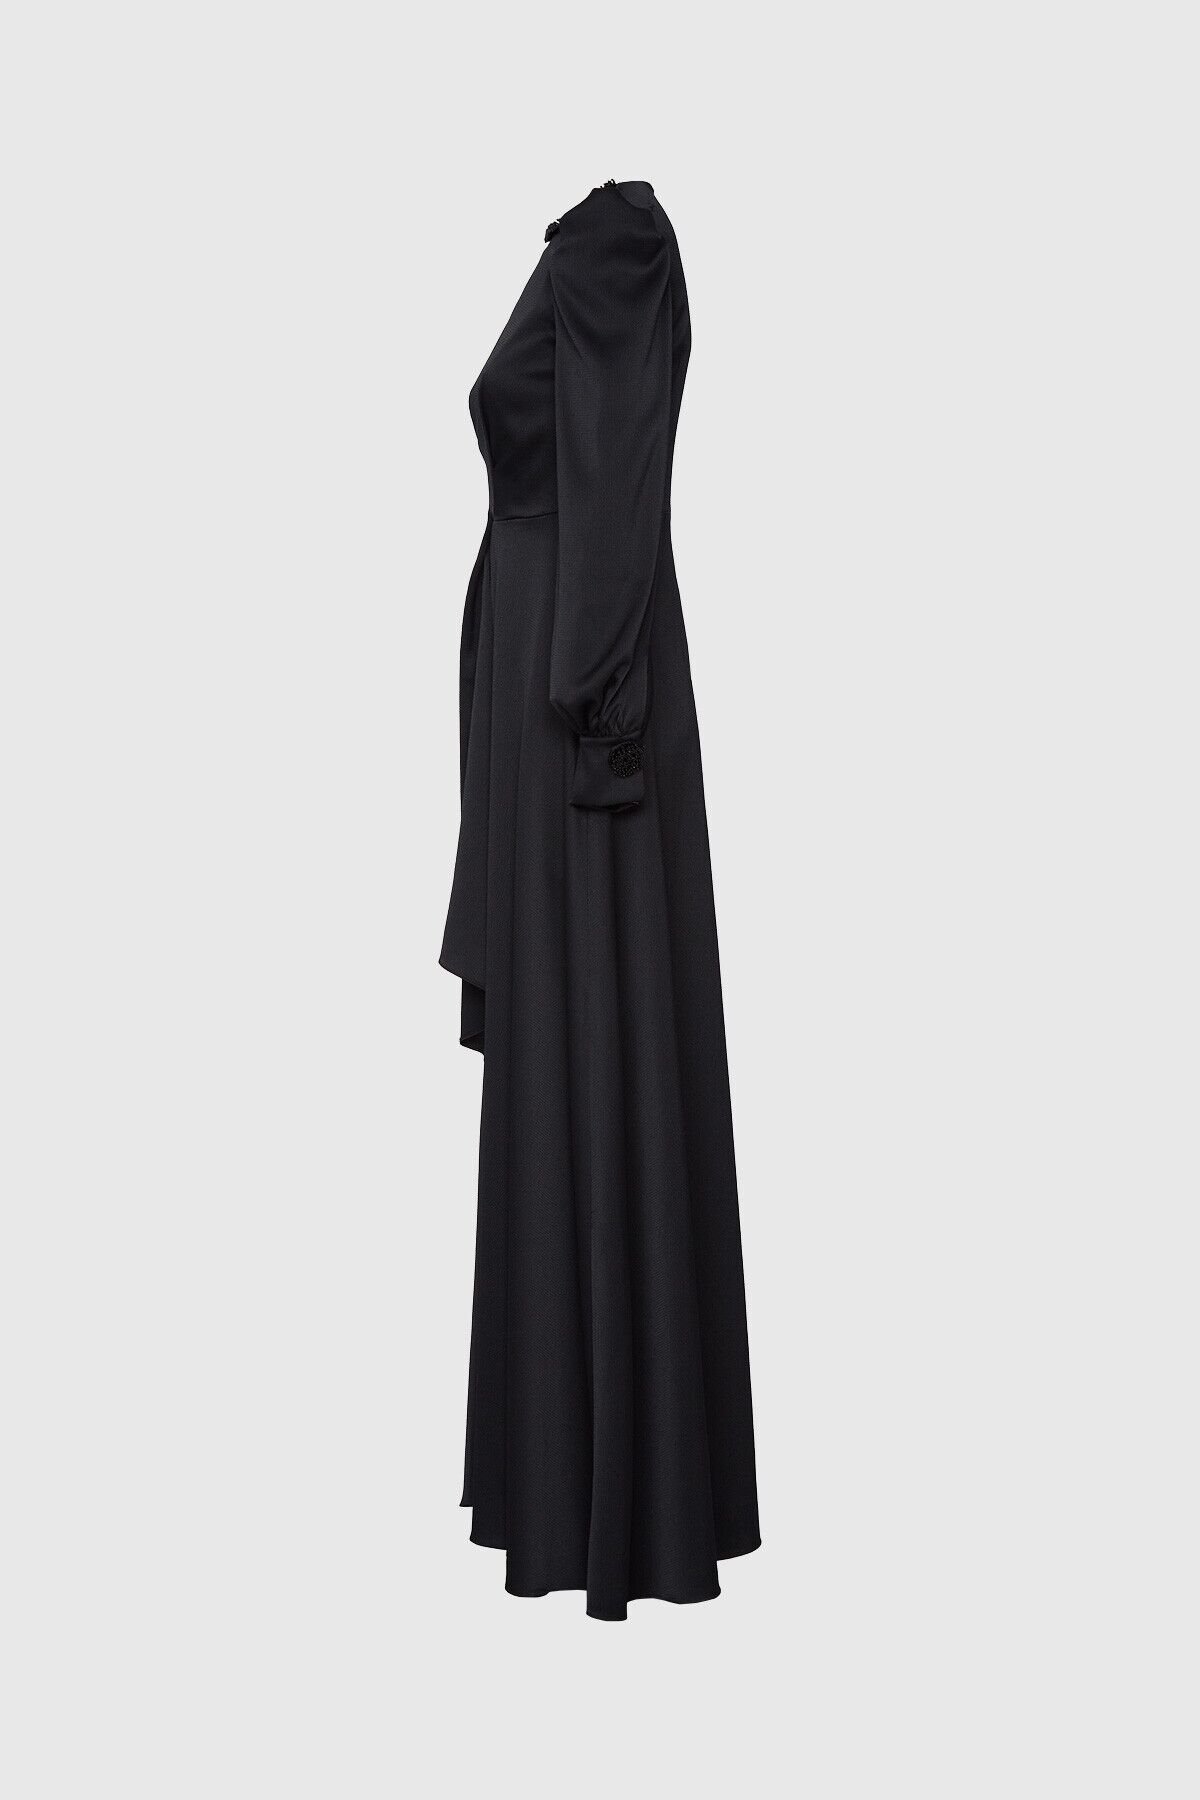 Stone Detailed Black Long Dress